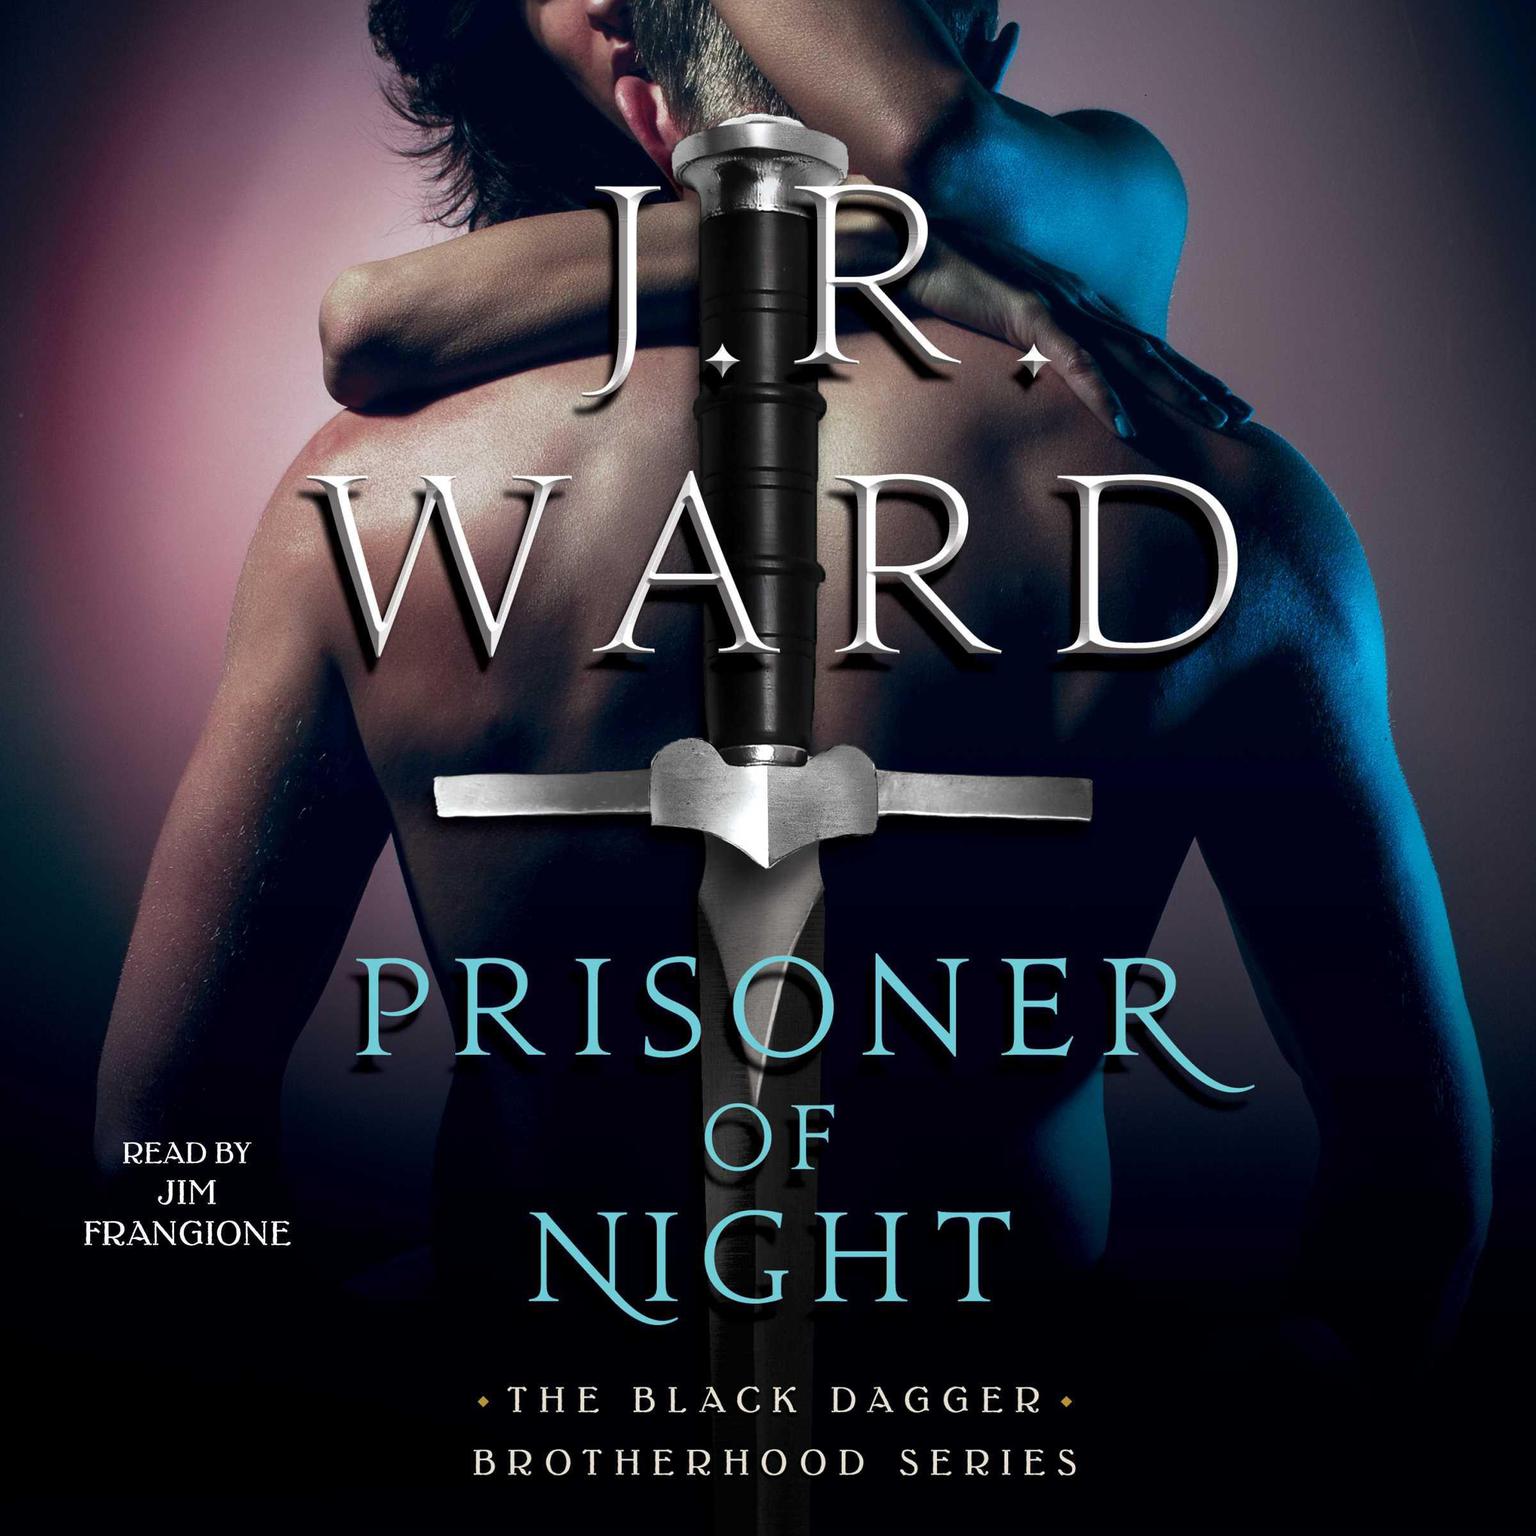 Prisoner of Night Audiobook, by J. R. Ward